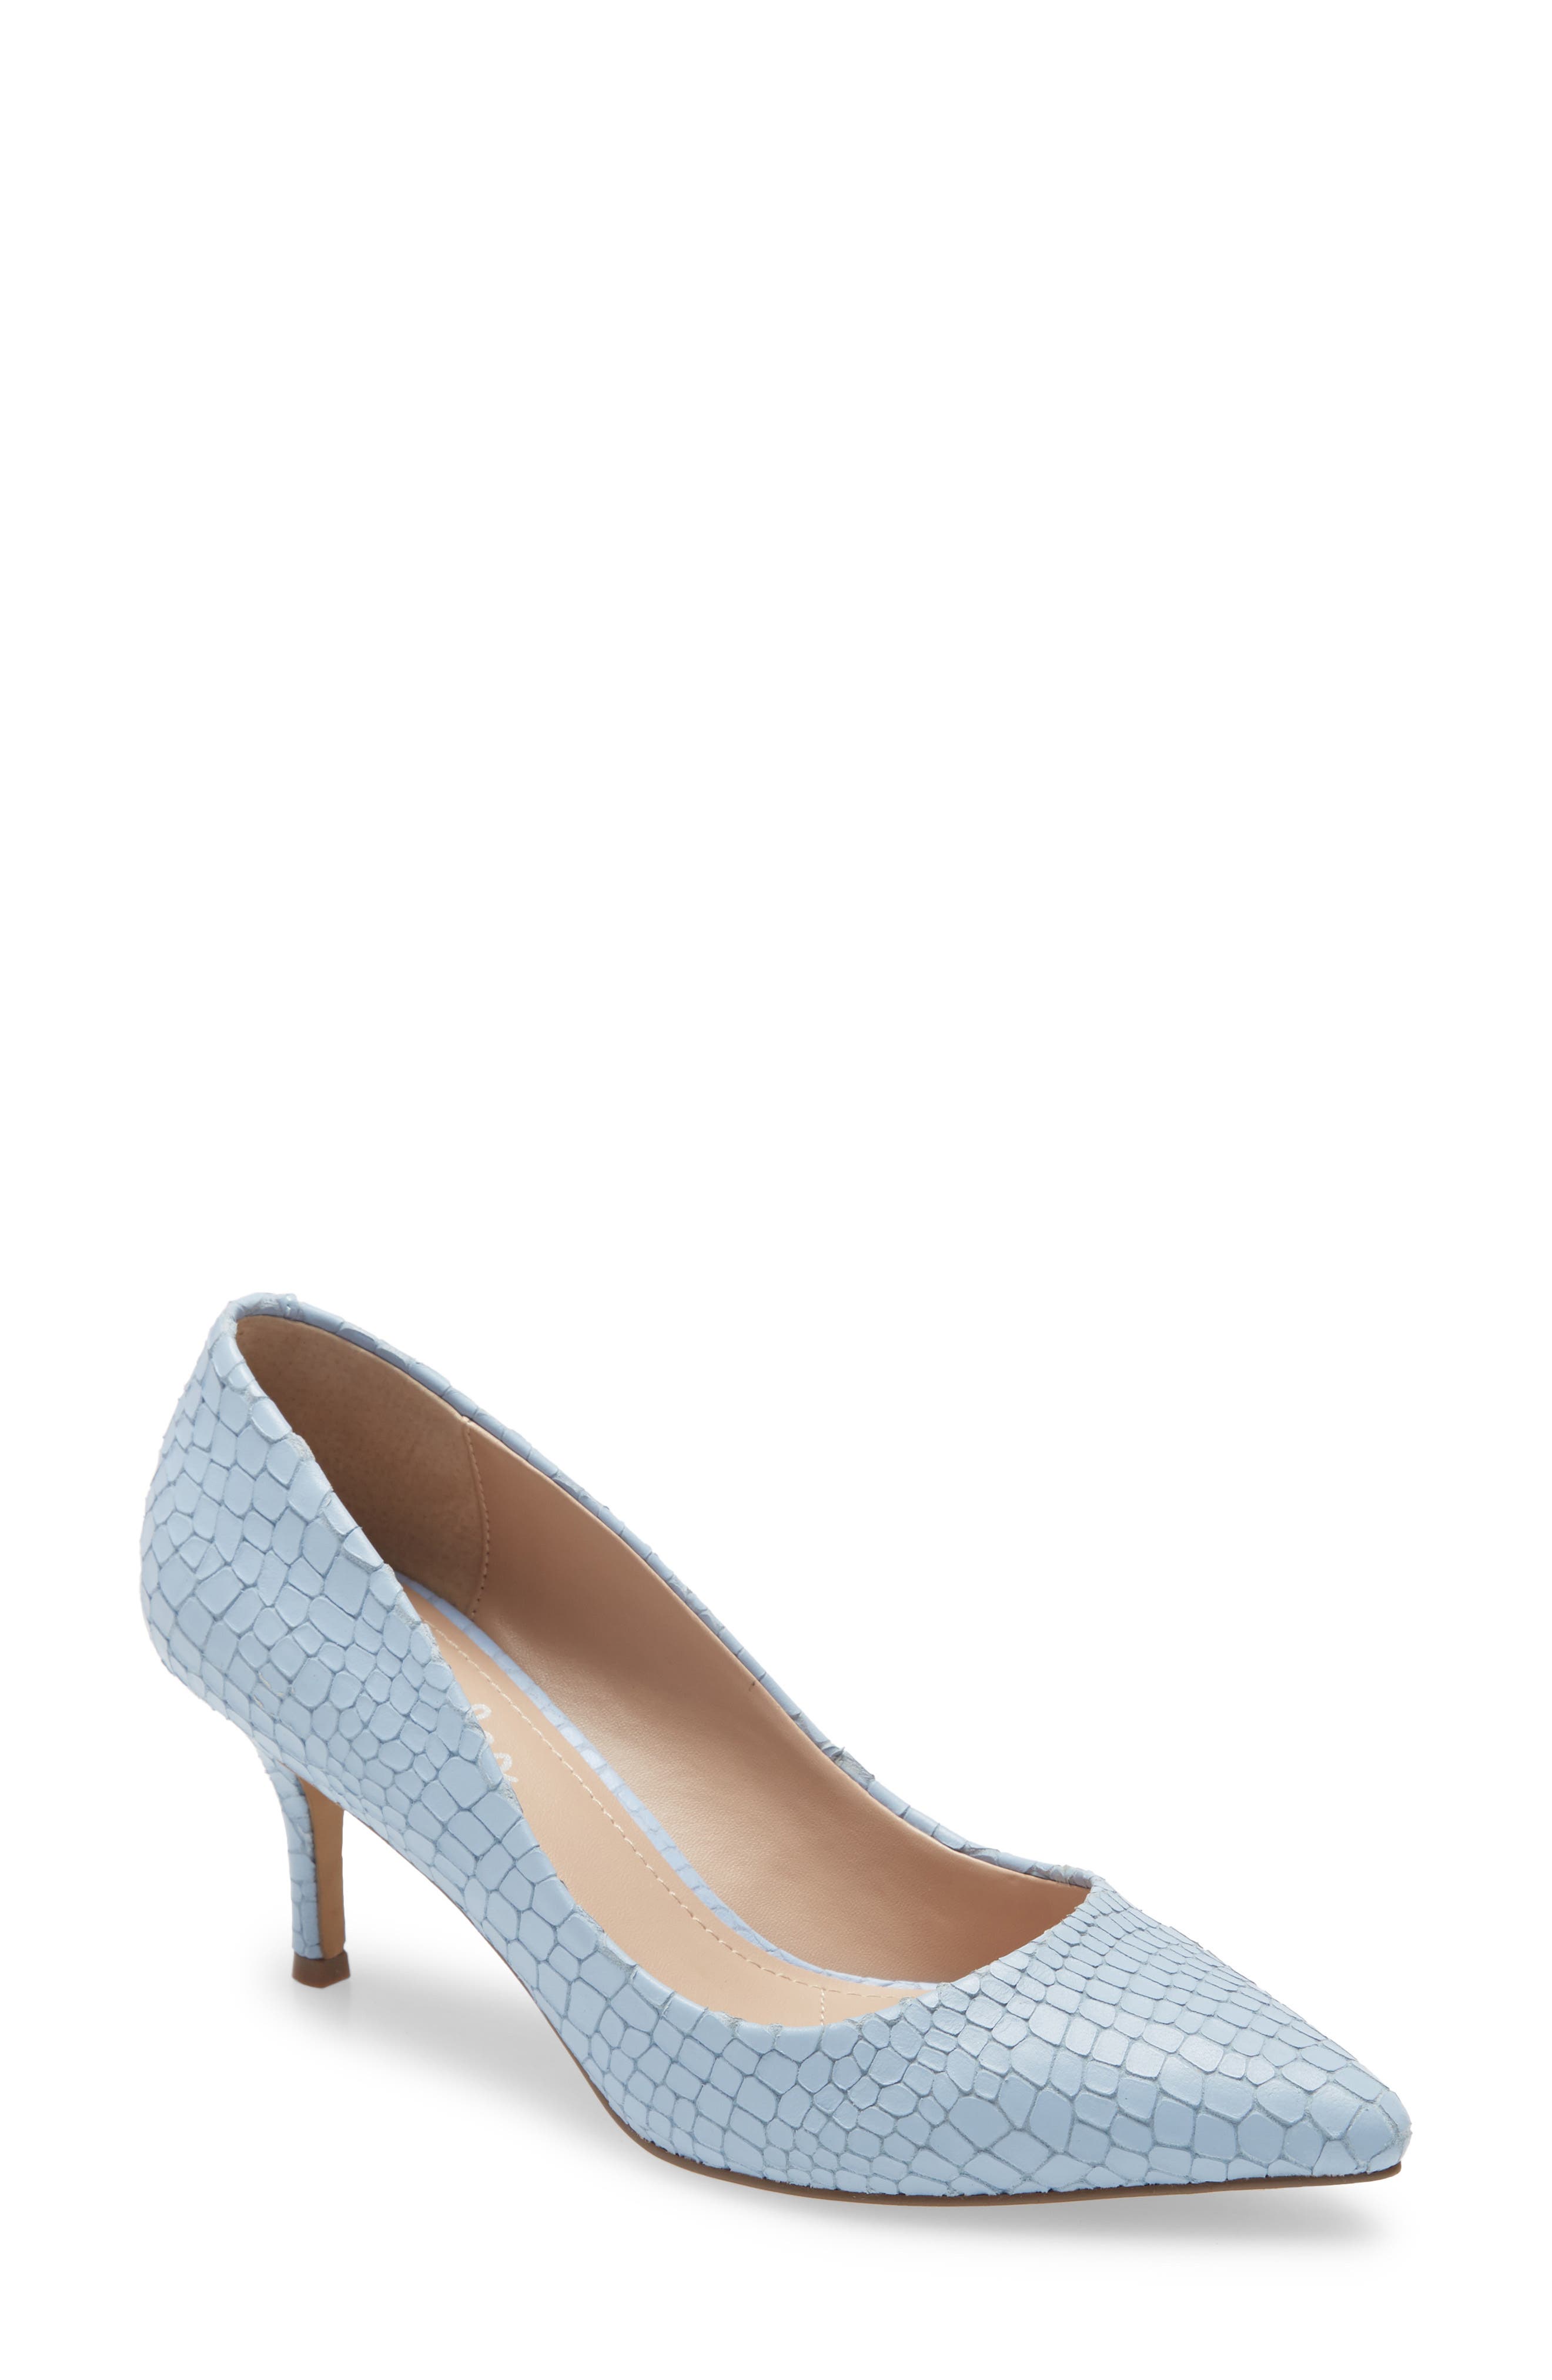 light blue low heels